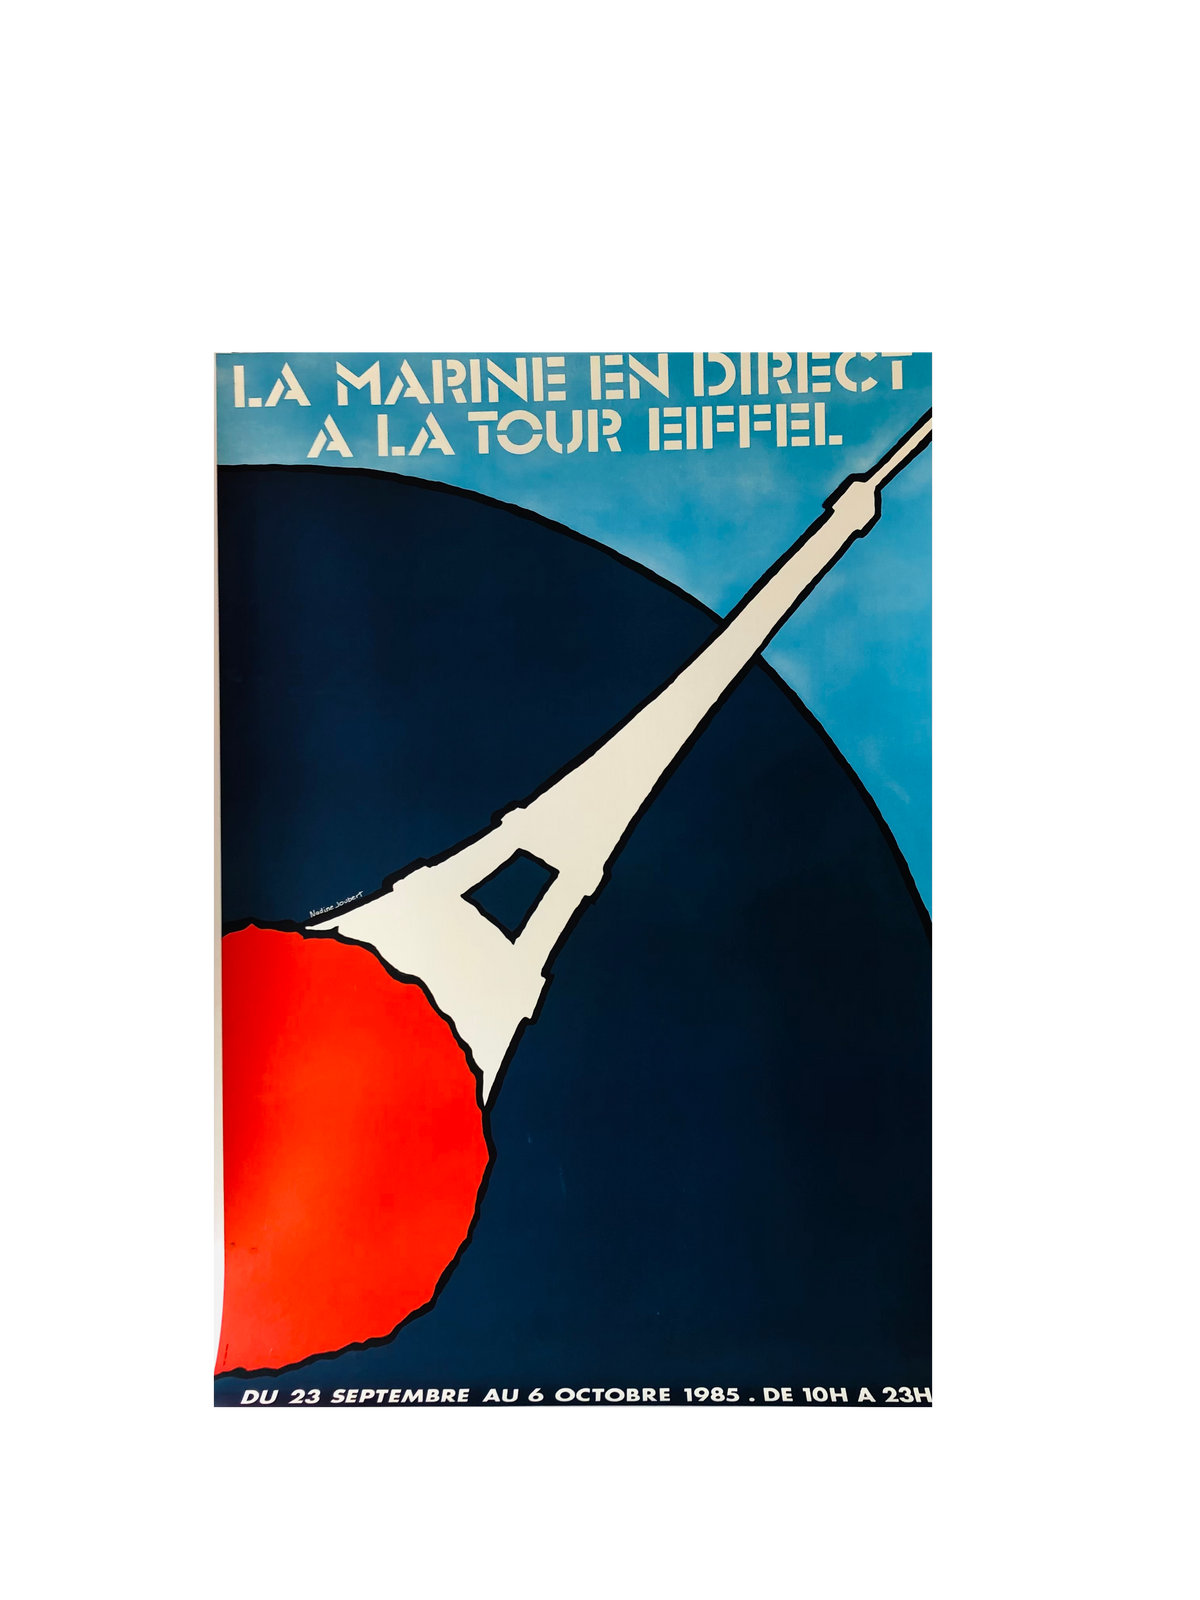 La Marine en Direct a La Tour Eiffel by Nadine Joubert